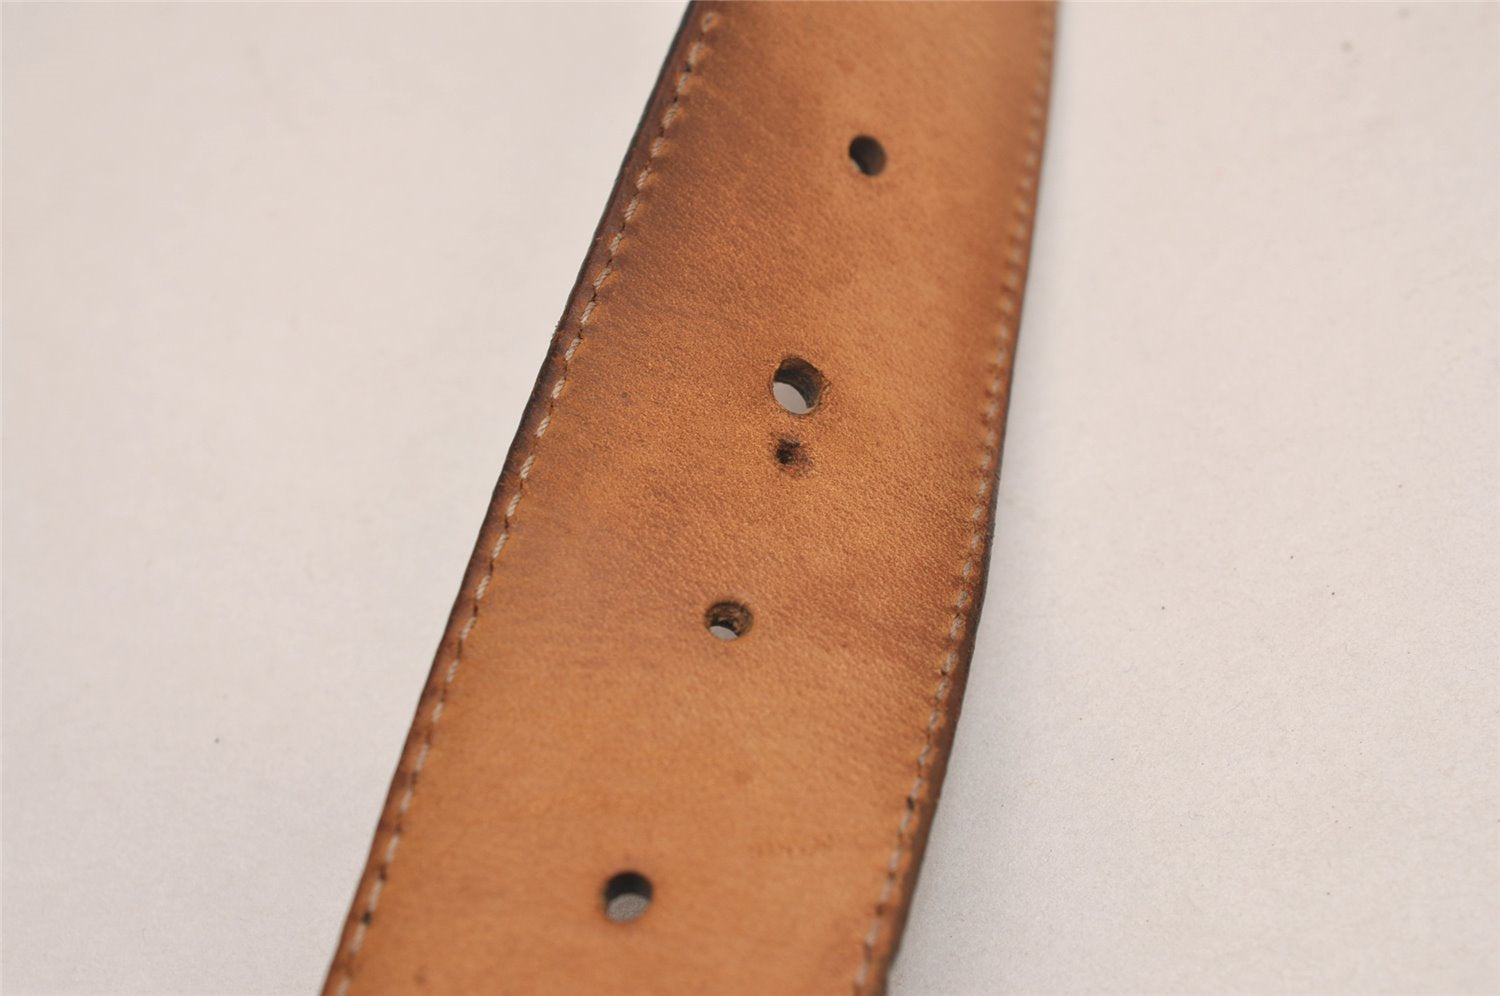 Auth GUCCI Guccissima Interlocking Belt GG Leather 90cm 35.4